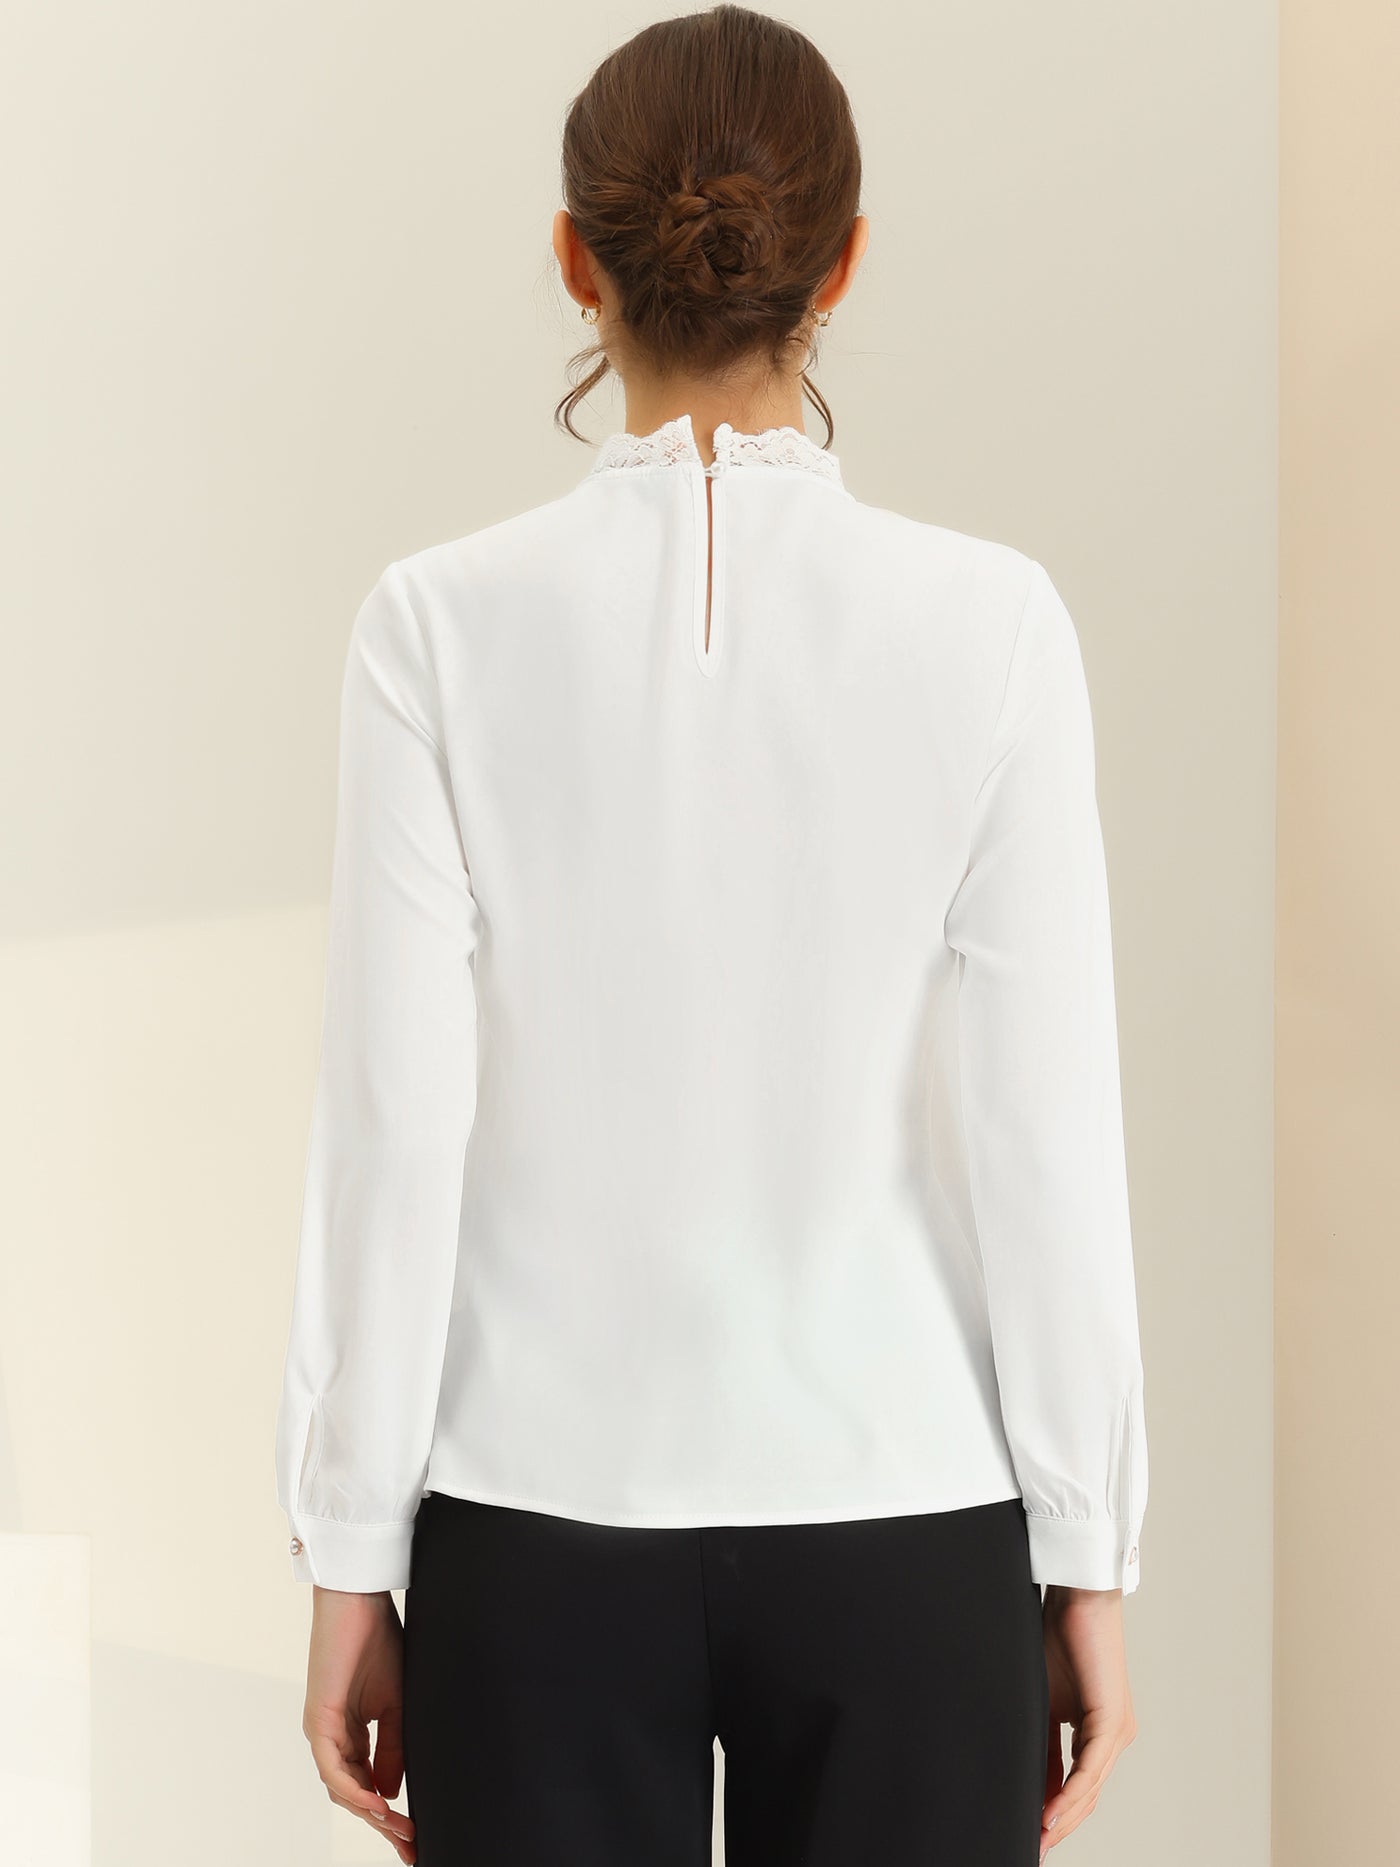 Allegra K Elegant Long Sleeve Lace Panel Stand Collar Blouse